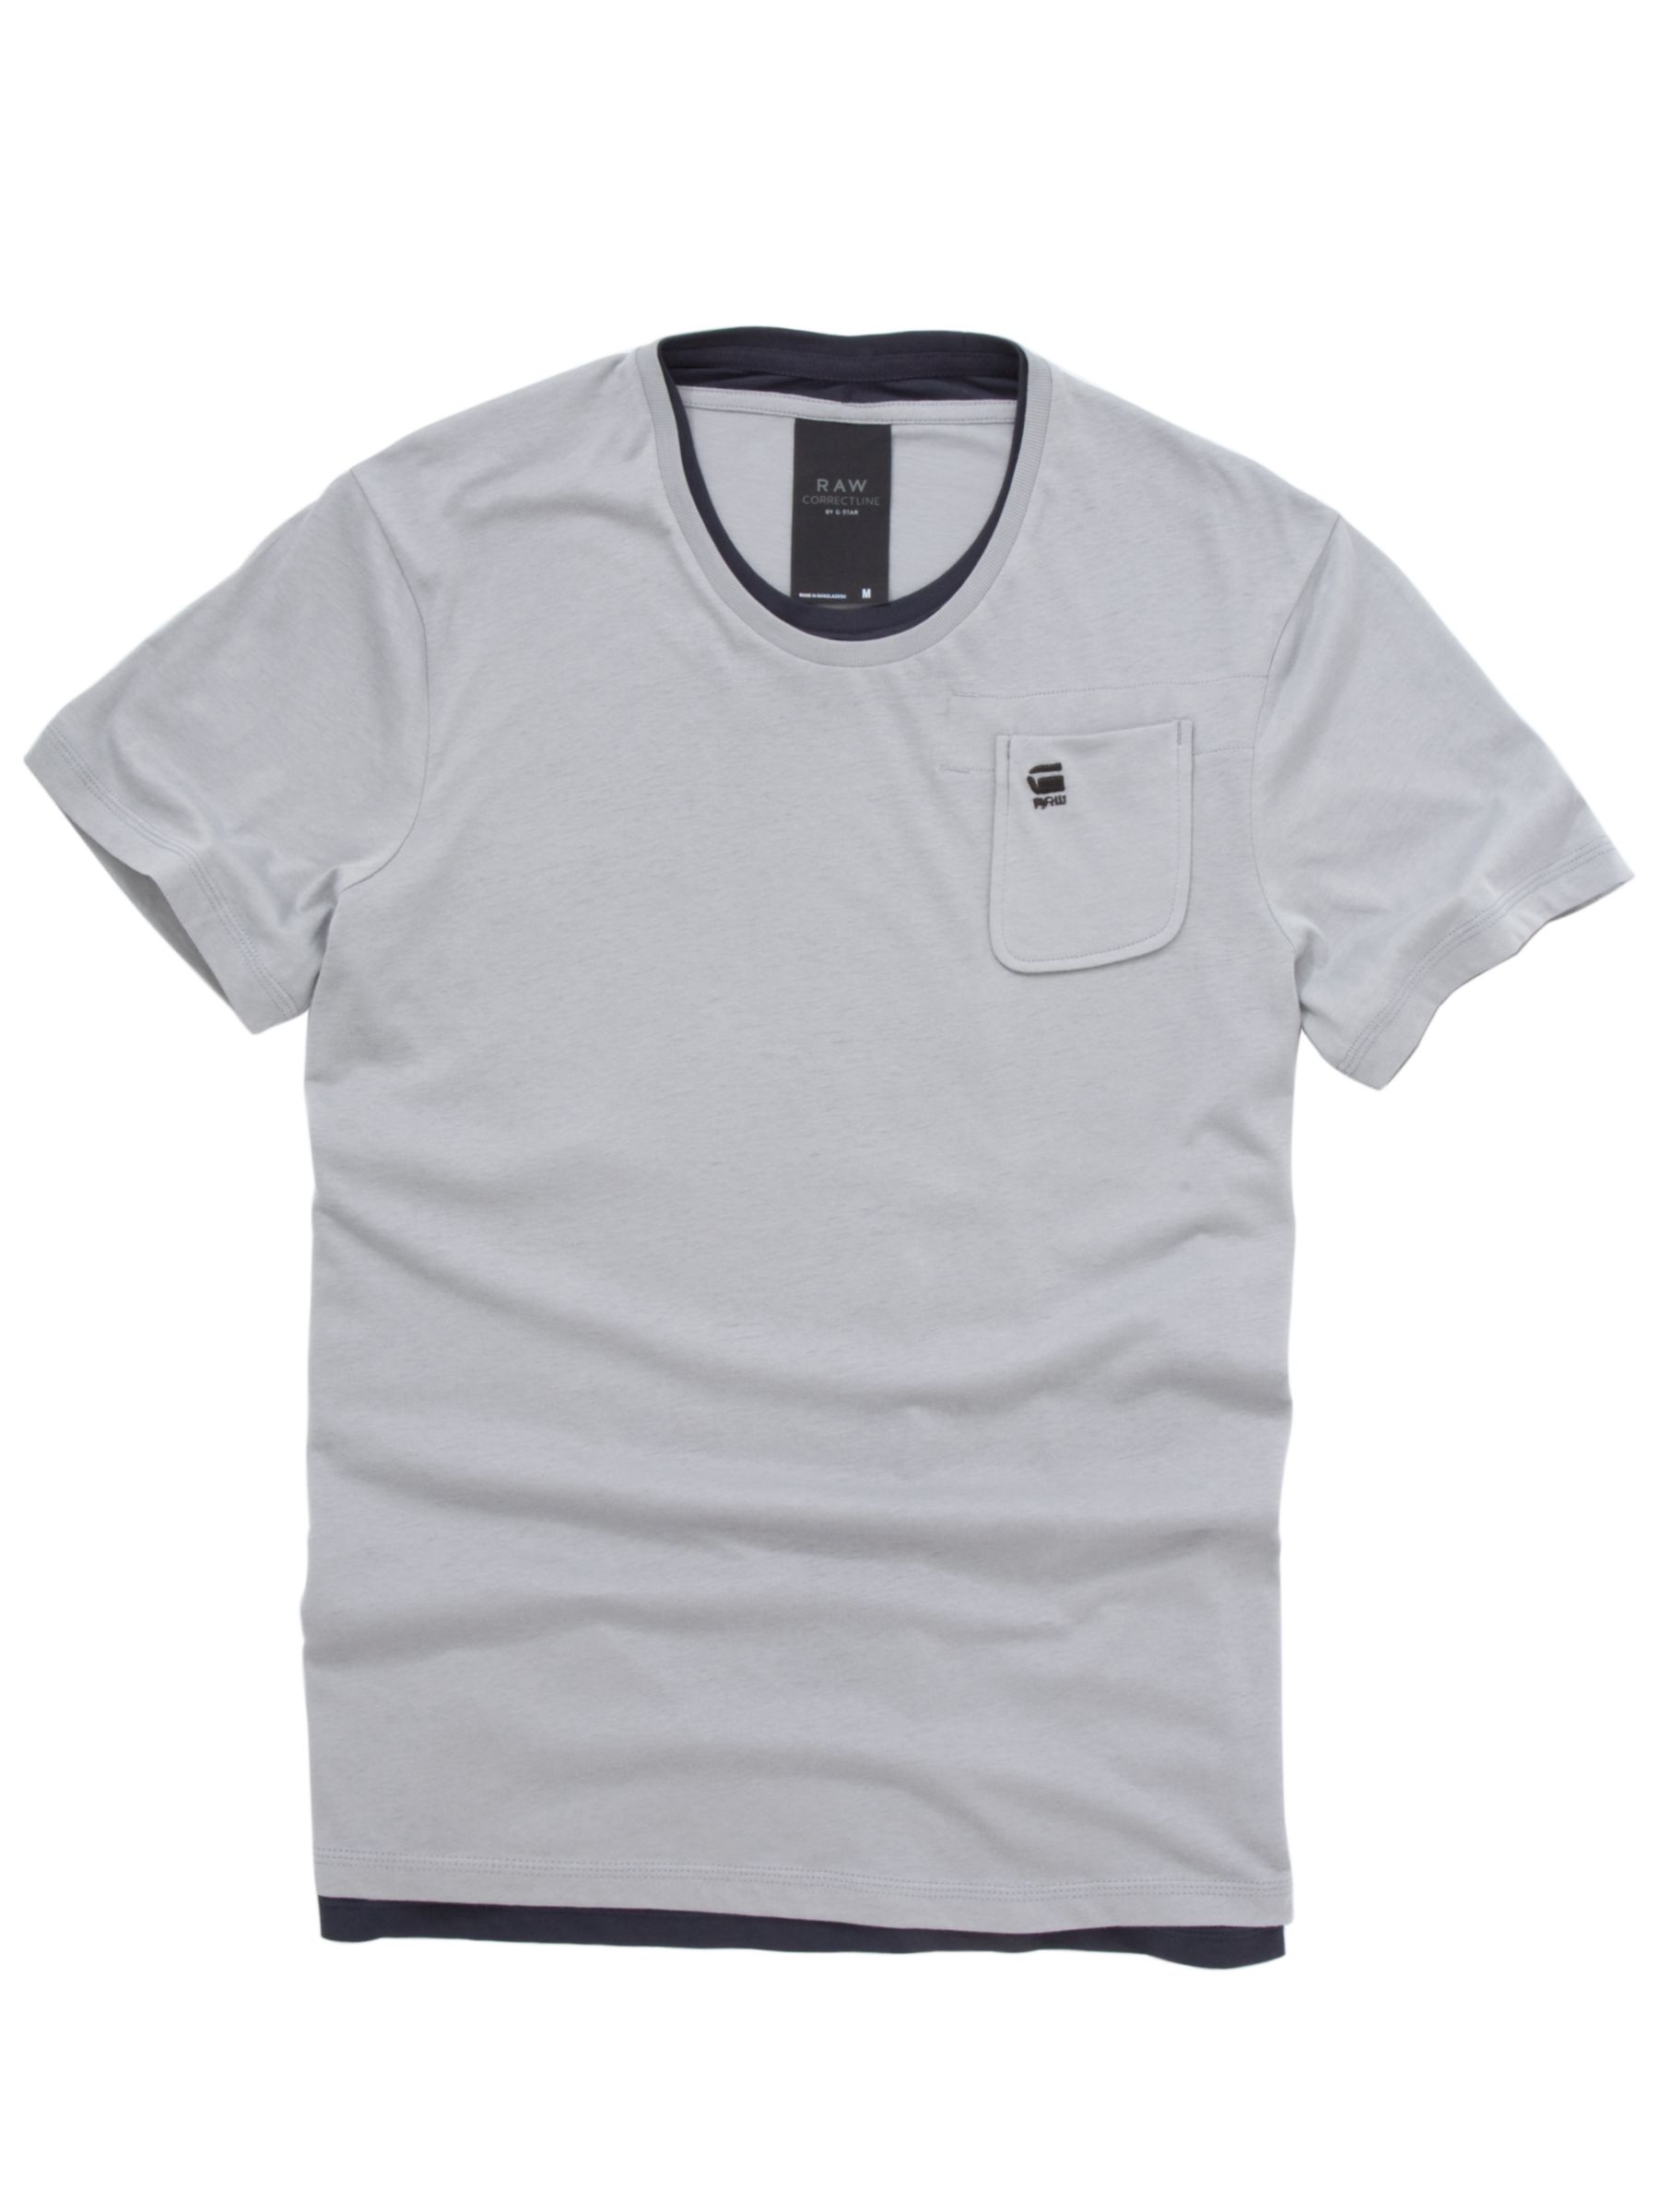 G-Star Raw Correct New Hagen T-Shirt, Winter Grey